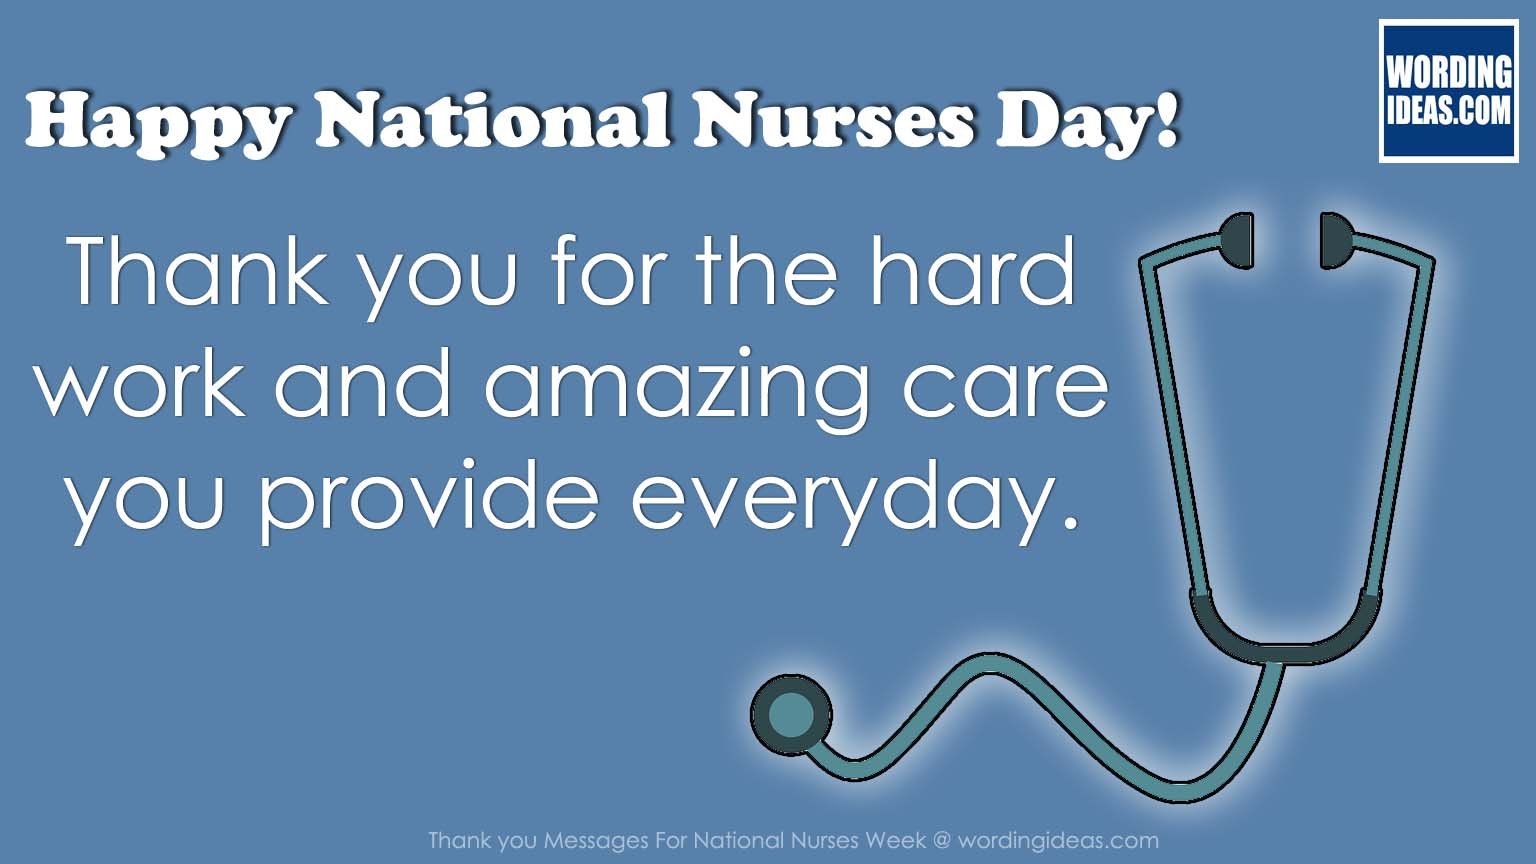 Thank You, Nurses! 30+ Messages For National Nurses Week » Wording Ideas